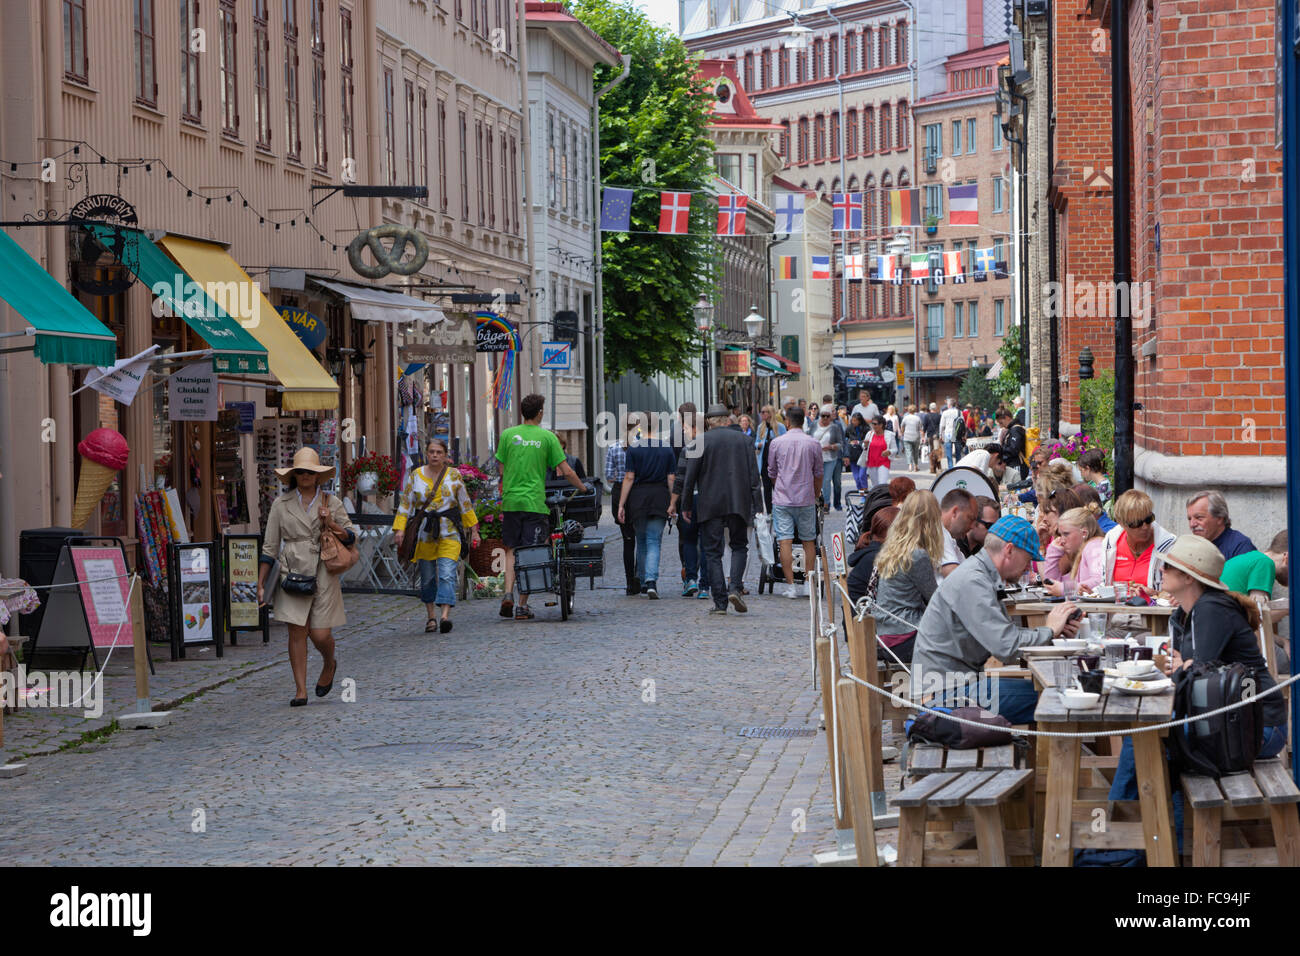 Cafes and shops in trendy Haga District, Haga Nygata, Gothenburg, West Gothland, Sweden, Scandinavia, Europe Stock Photo